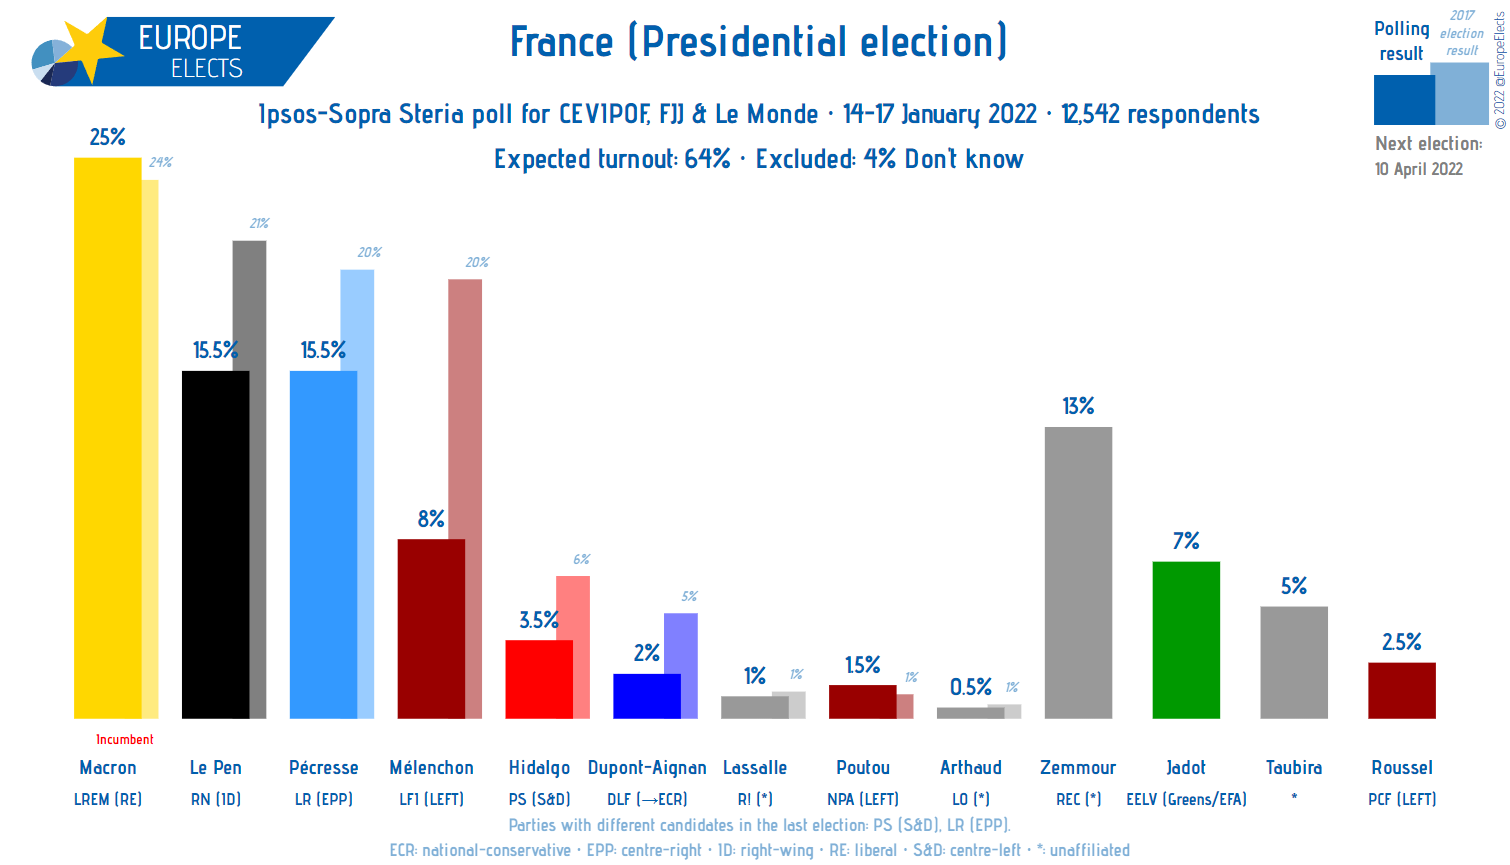 Europe Elects on Twitter: &quot;France, Ipsos-Sopra Steria poll: Presidential  election Macron (LREM-RE): 25% (+1) Le Pen (RN-ID): 15.5% (+1) Pécresse  (LR-EPP): 15.5% (-1.5) Zemmour (REC-*): 13% (-1.5) ... +/- vs. 7-13 December